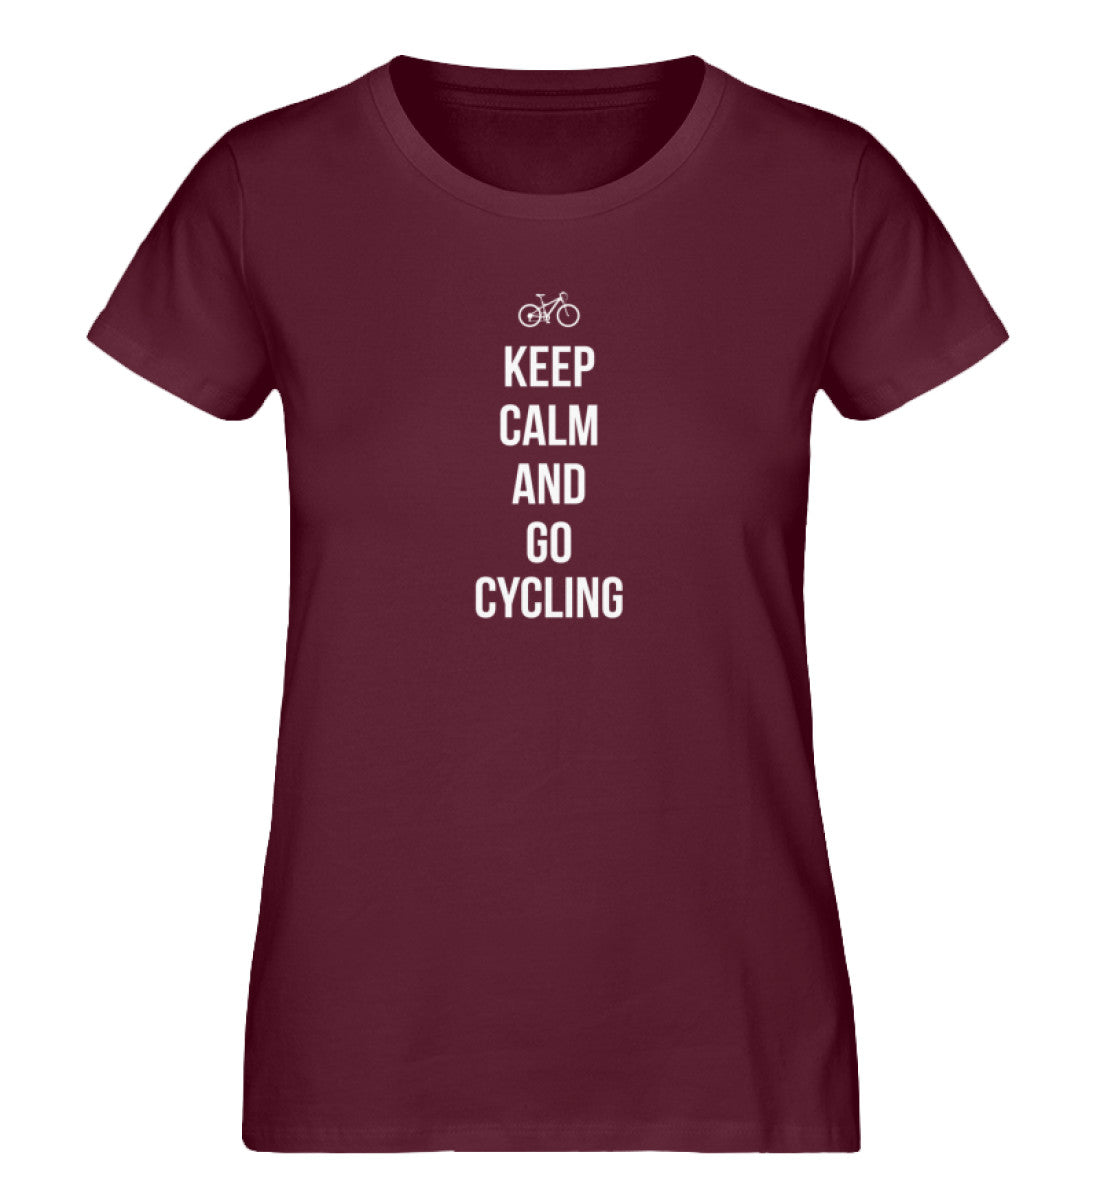 Keep calm and go cycling - Damen Organic T-Shirt fahrrad Weinrot